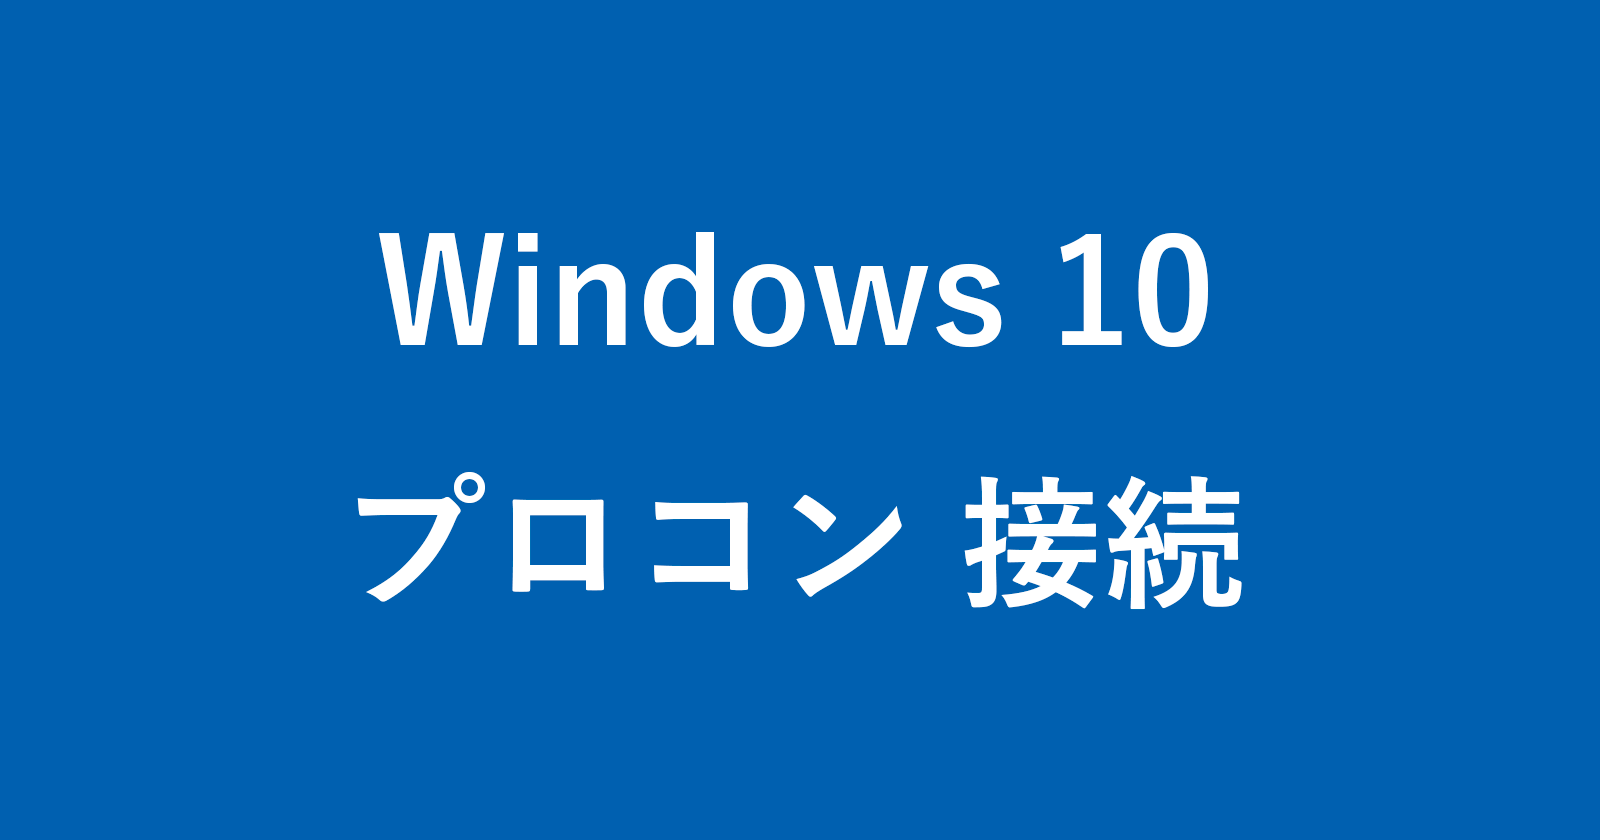 windows 10 connect pro controller